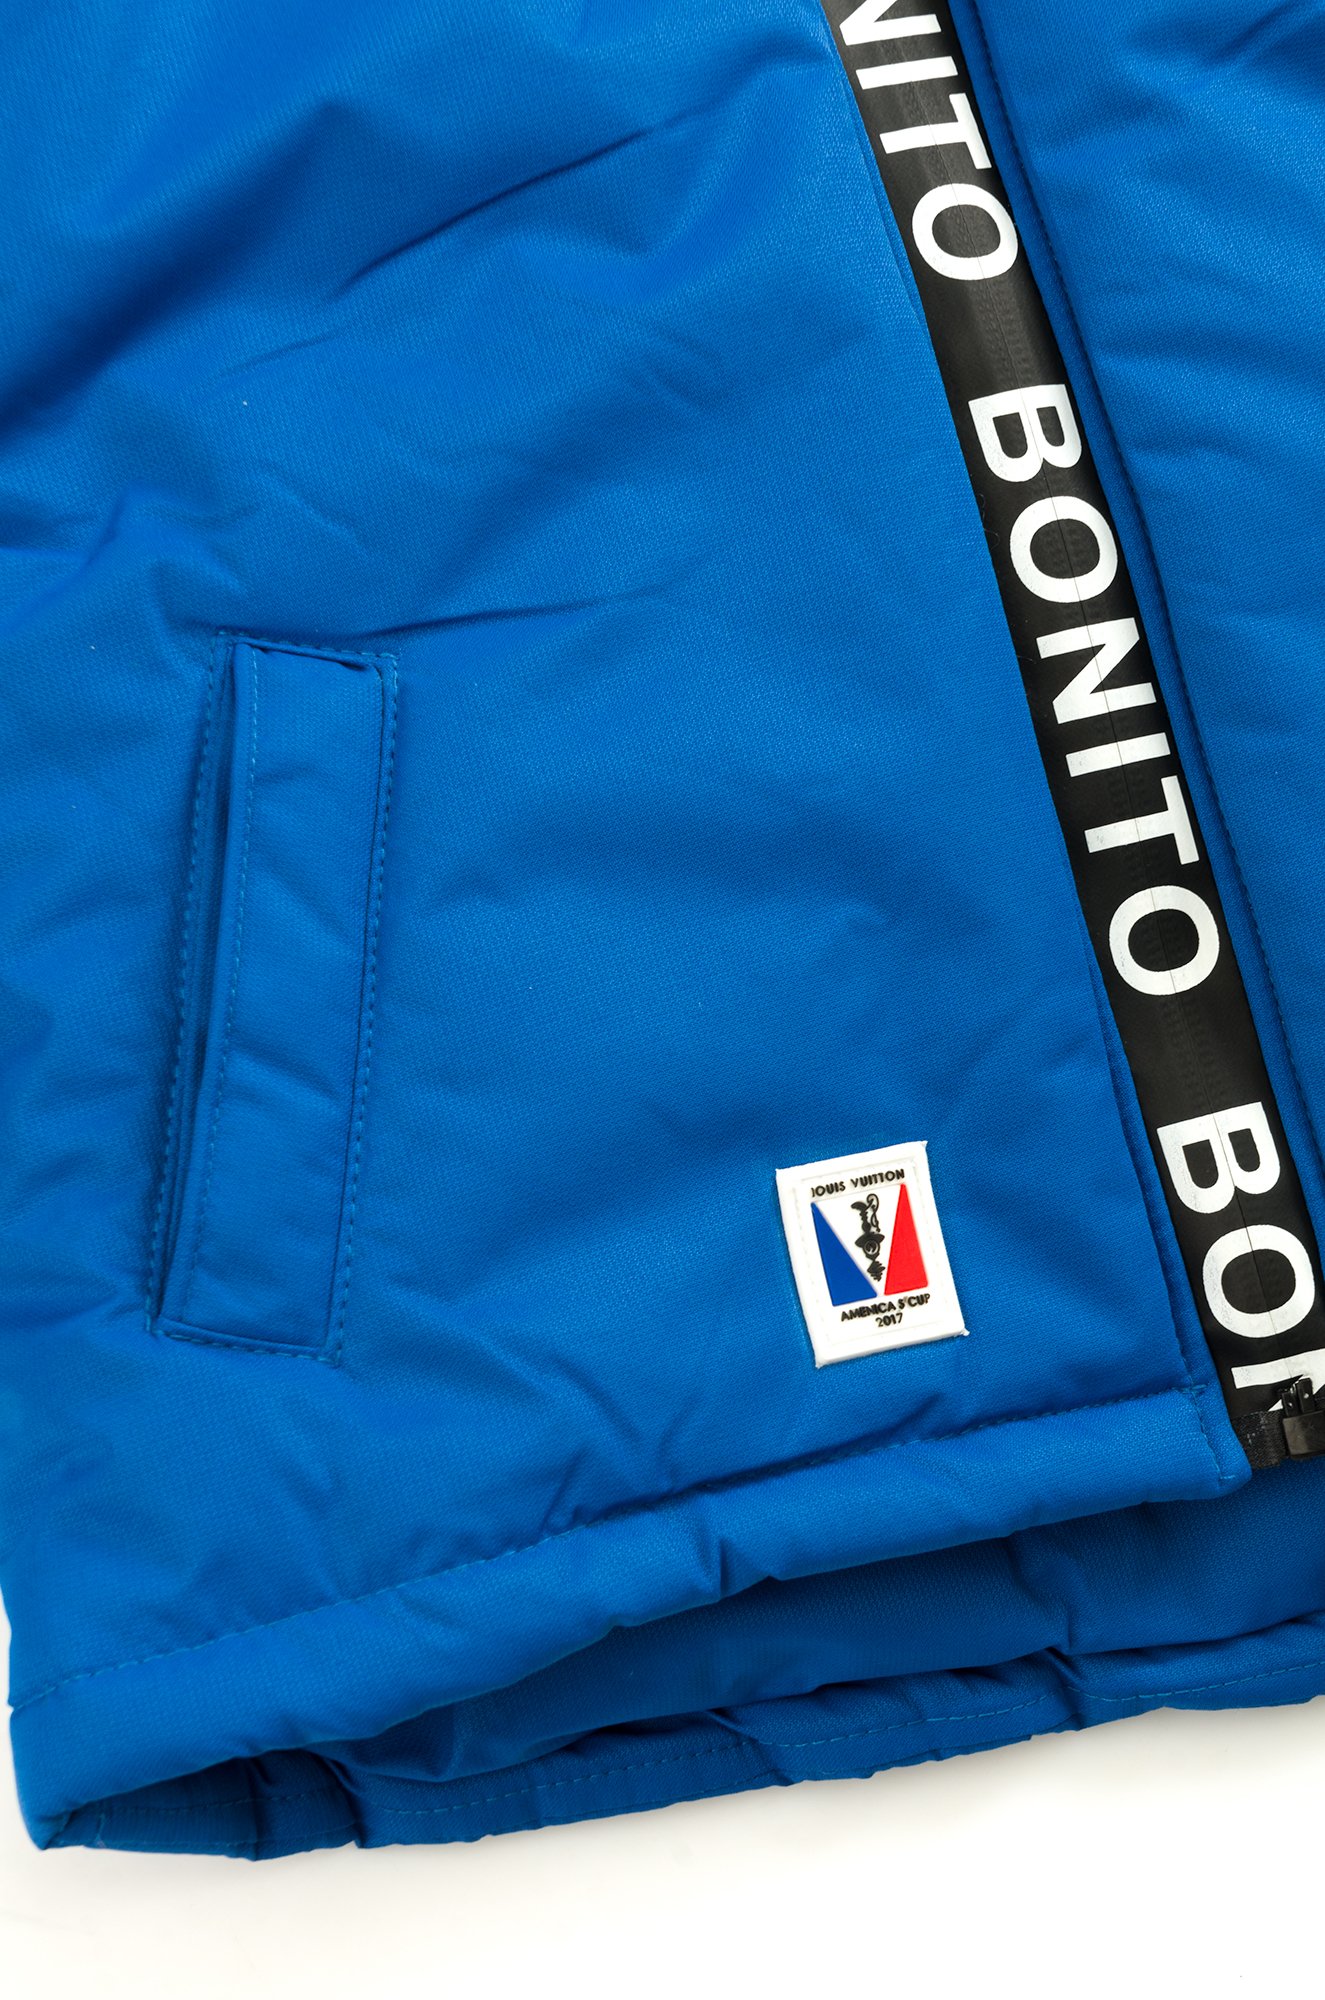 Куртка для мальчика Bonito